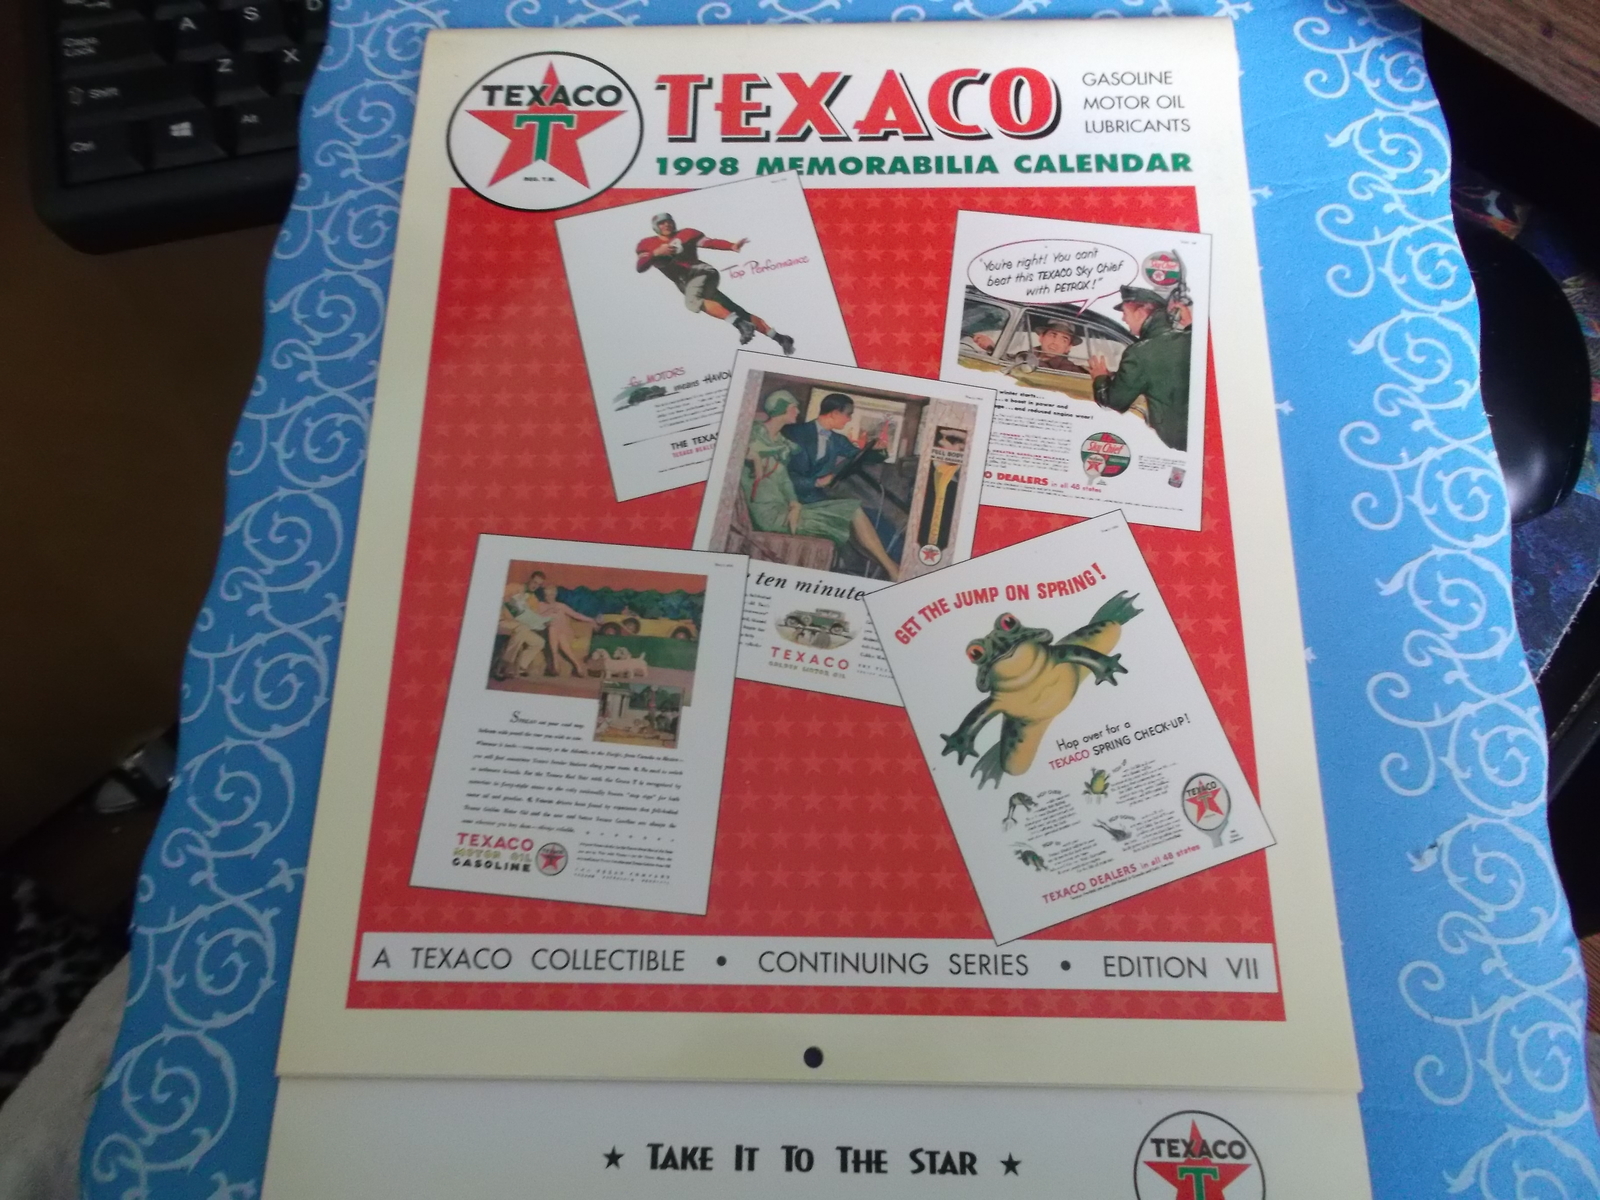 Primary image for 2015 Texaco Calendar which is a 1998 Memorabilia Calendar Edition VII Sample